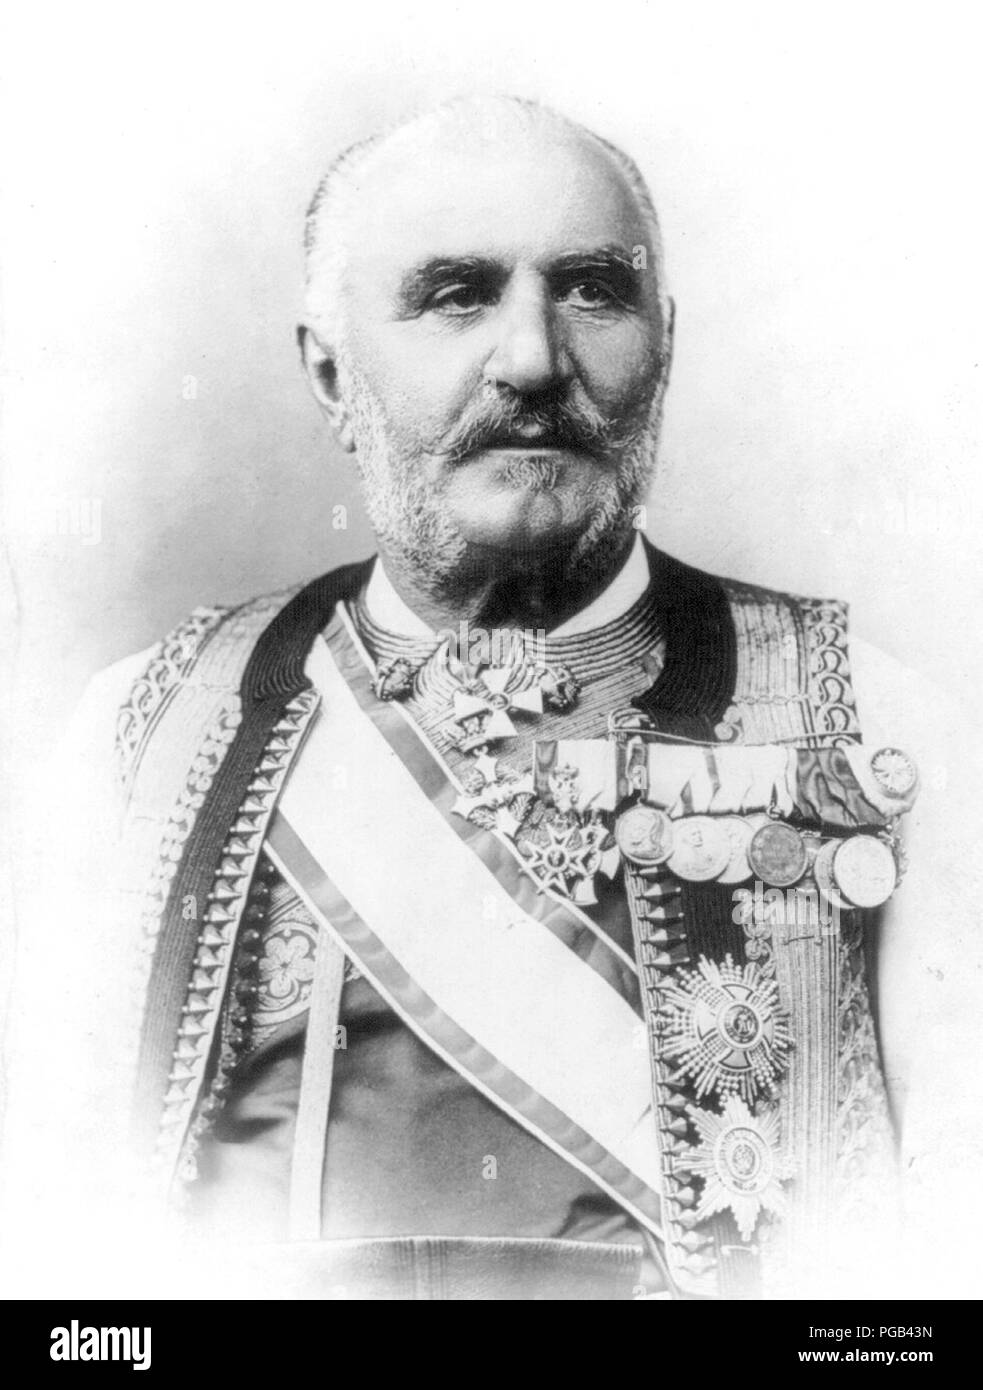 Nicholas I, King of Montenegro, 1841-1921, head and shoulders portrait Stock Photo